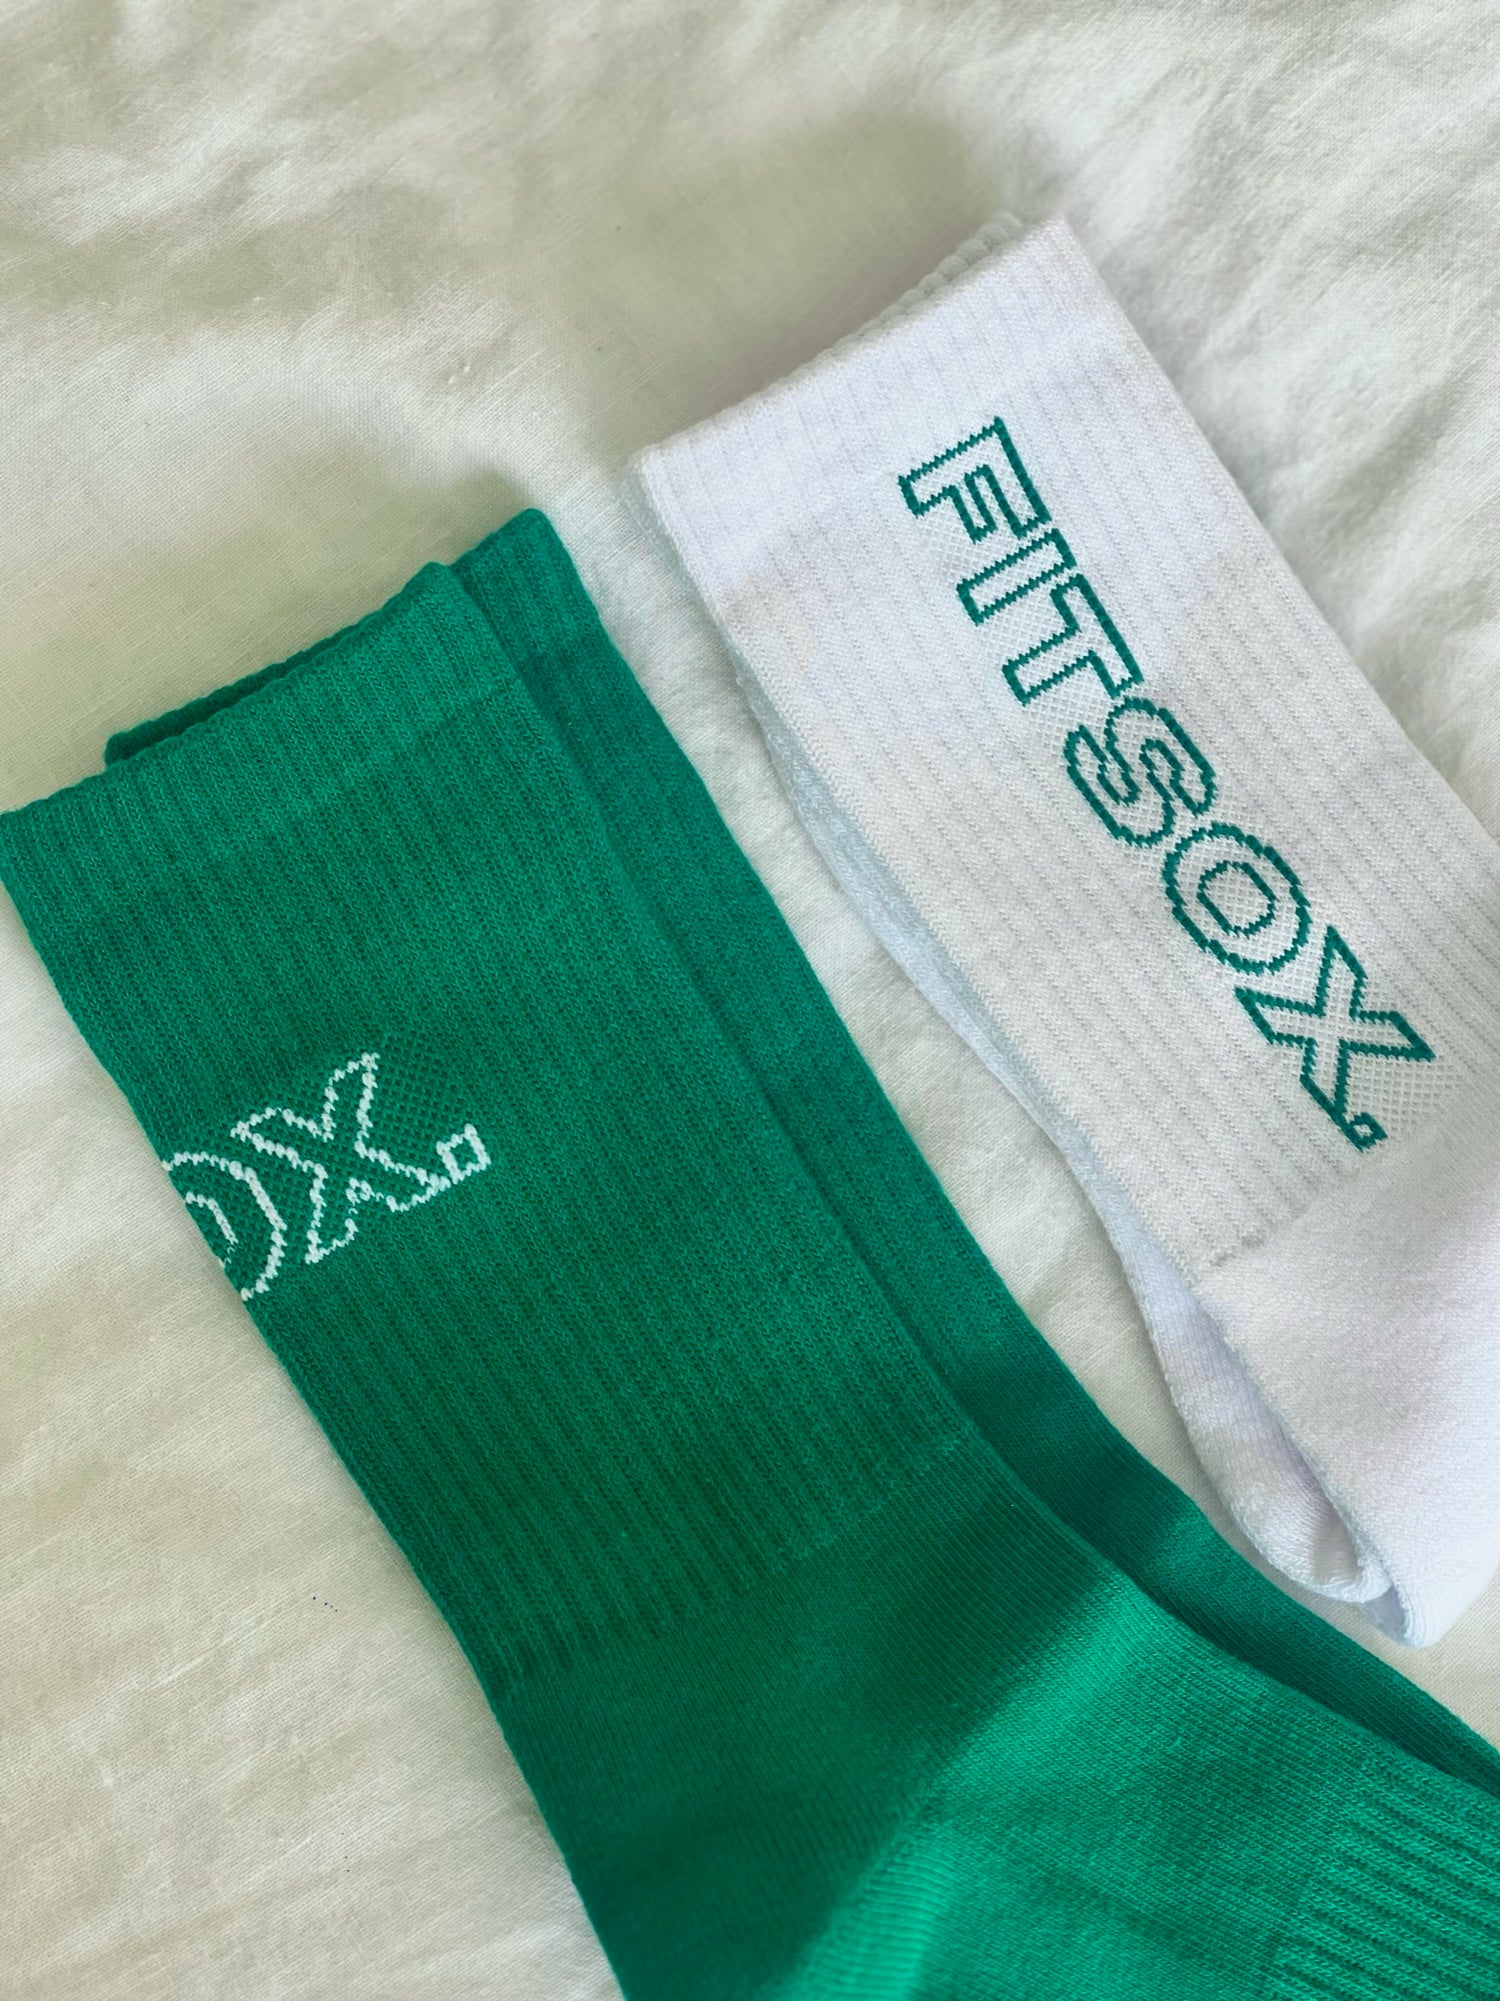 Fitsox Crew Socks - 2 pack - Green & White